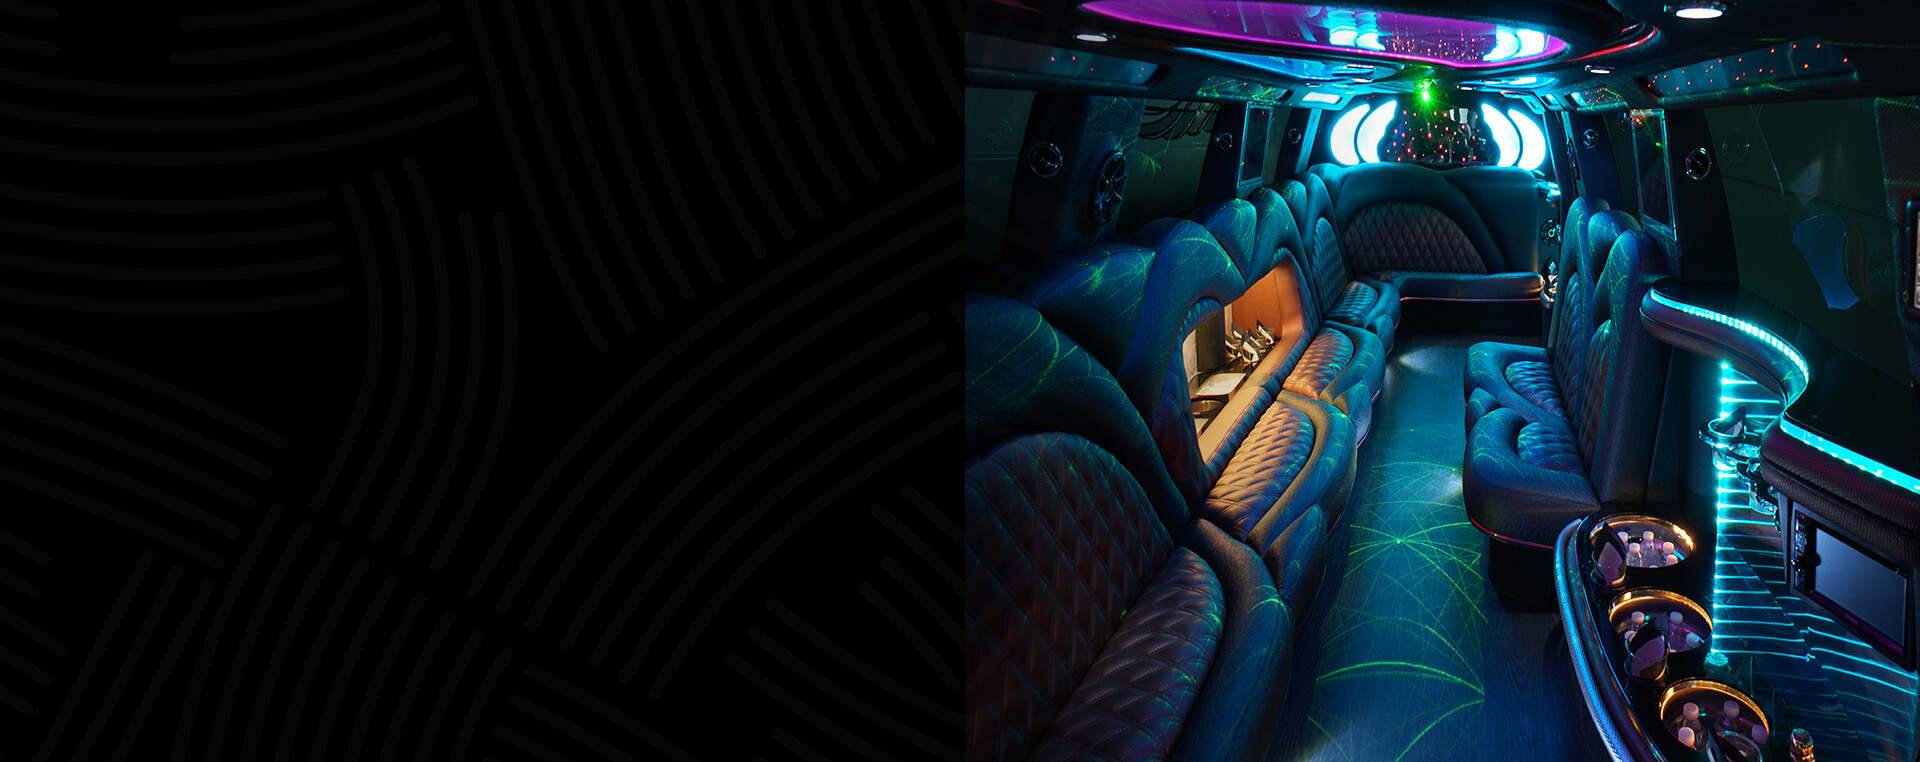 Luxury seats in a luxury vehicle